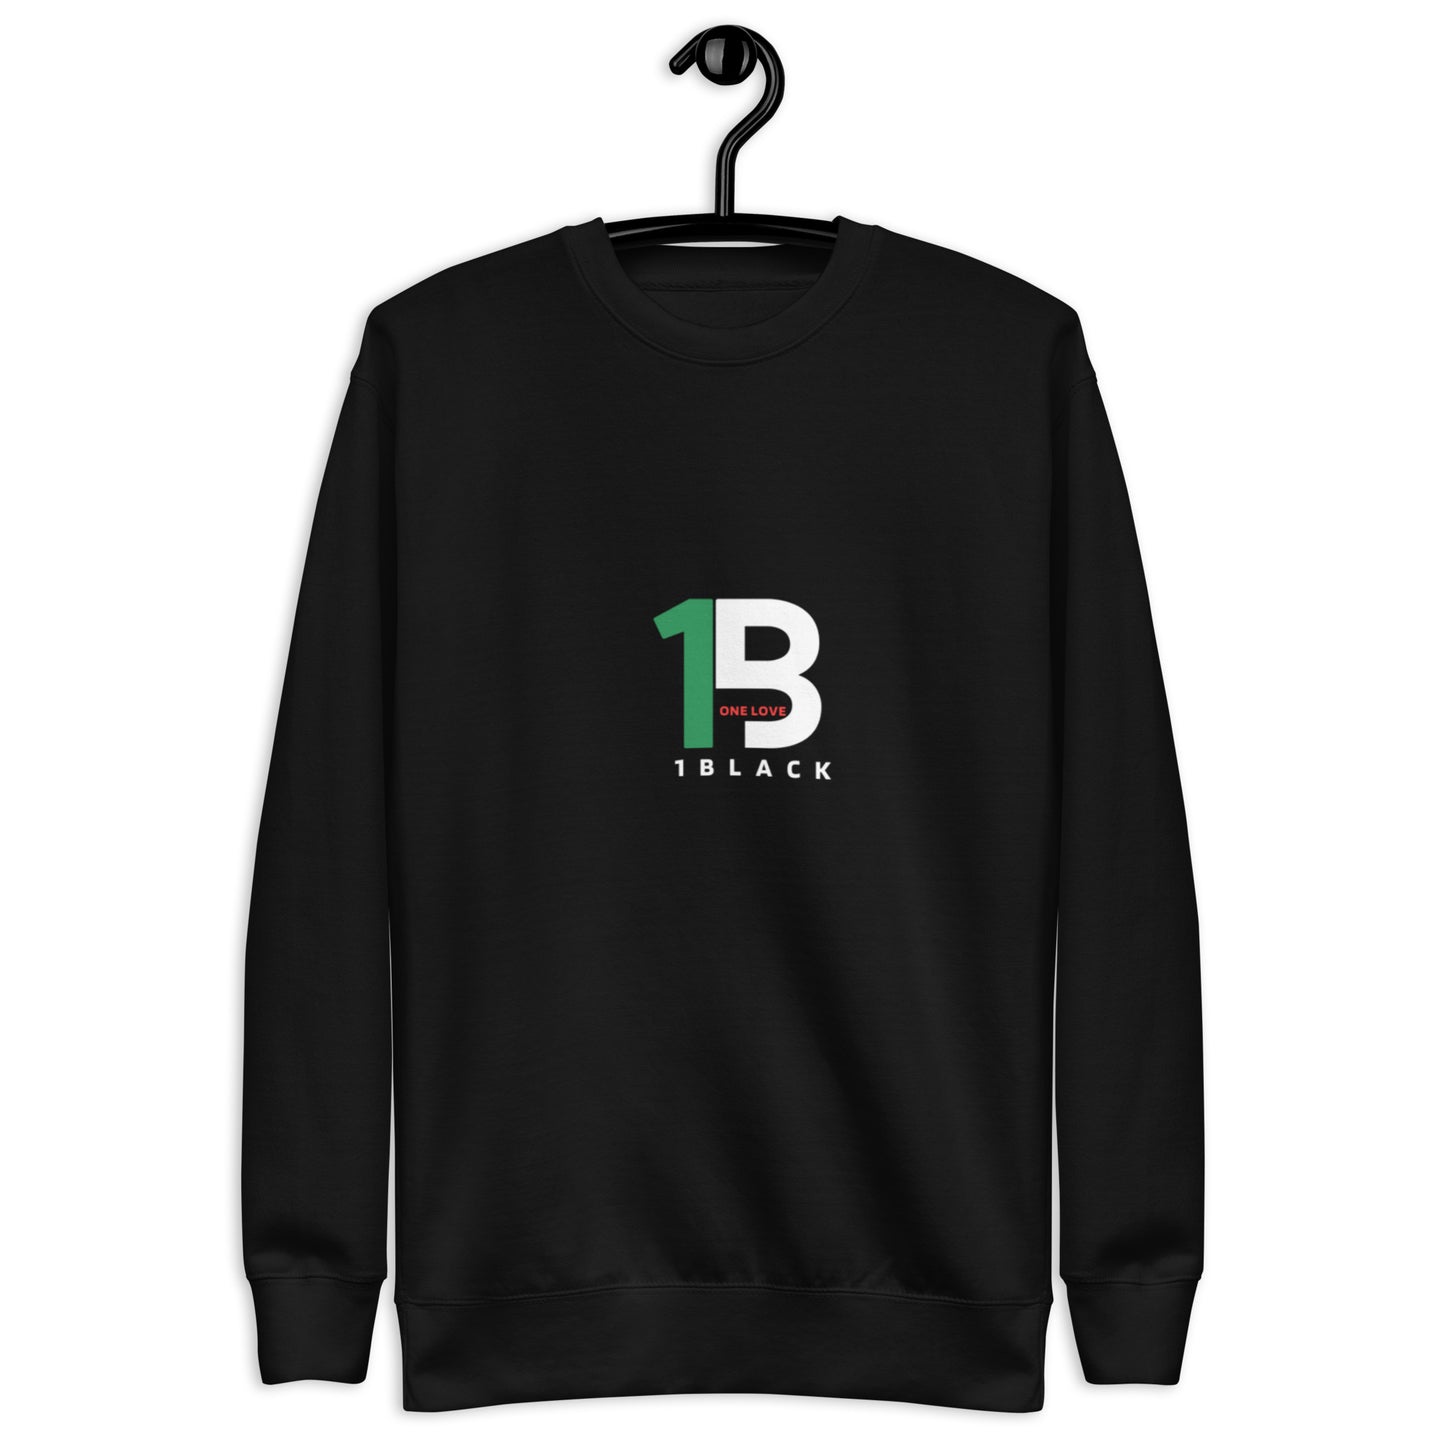 1black Premium Sweatshirt